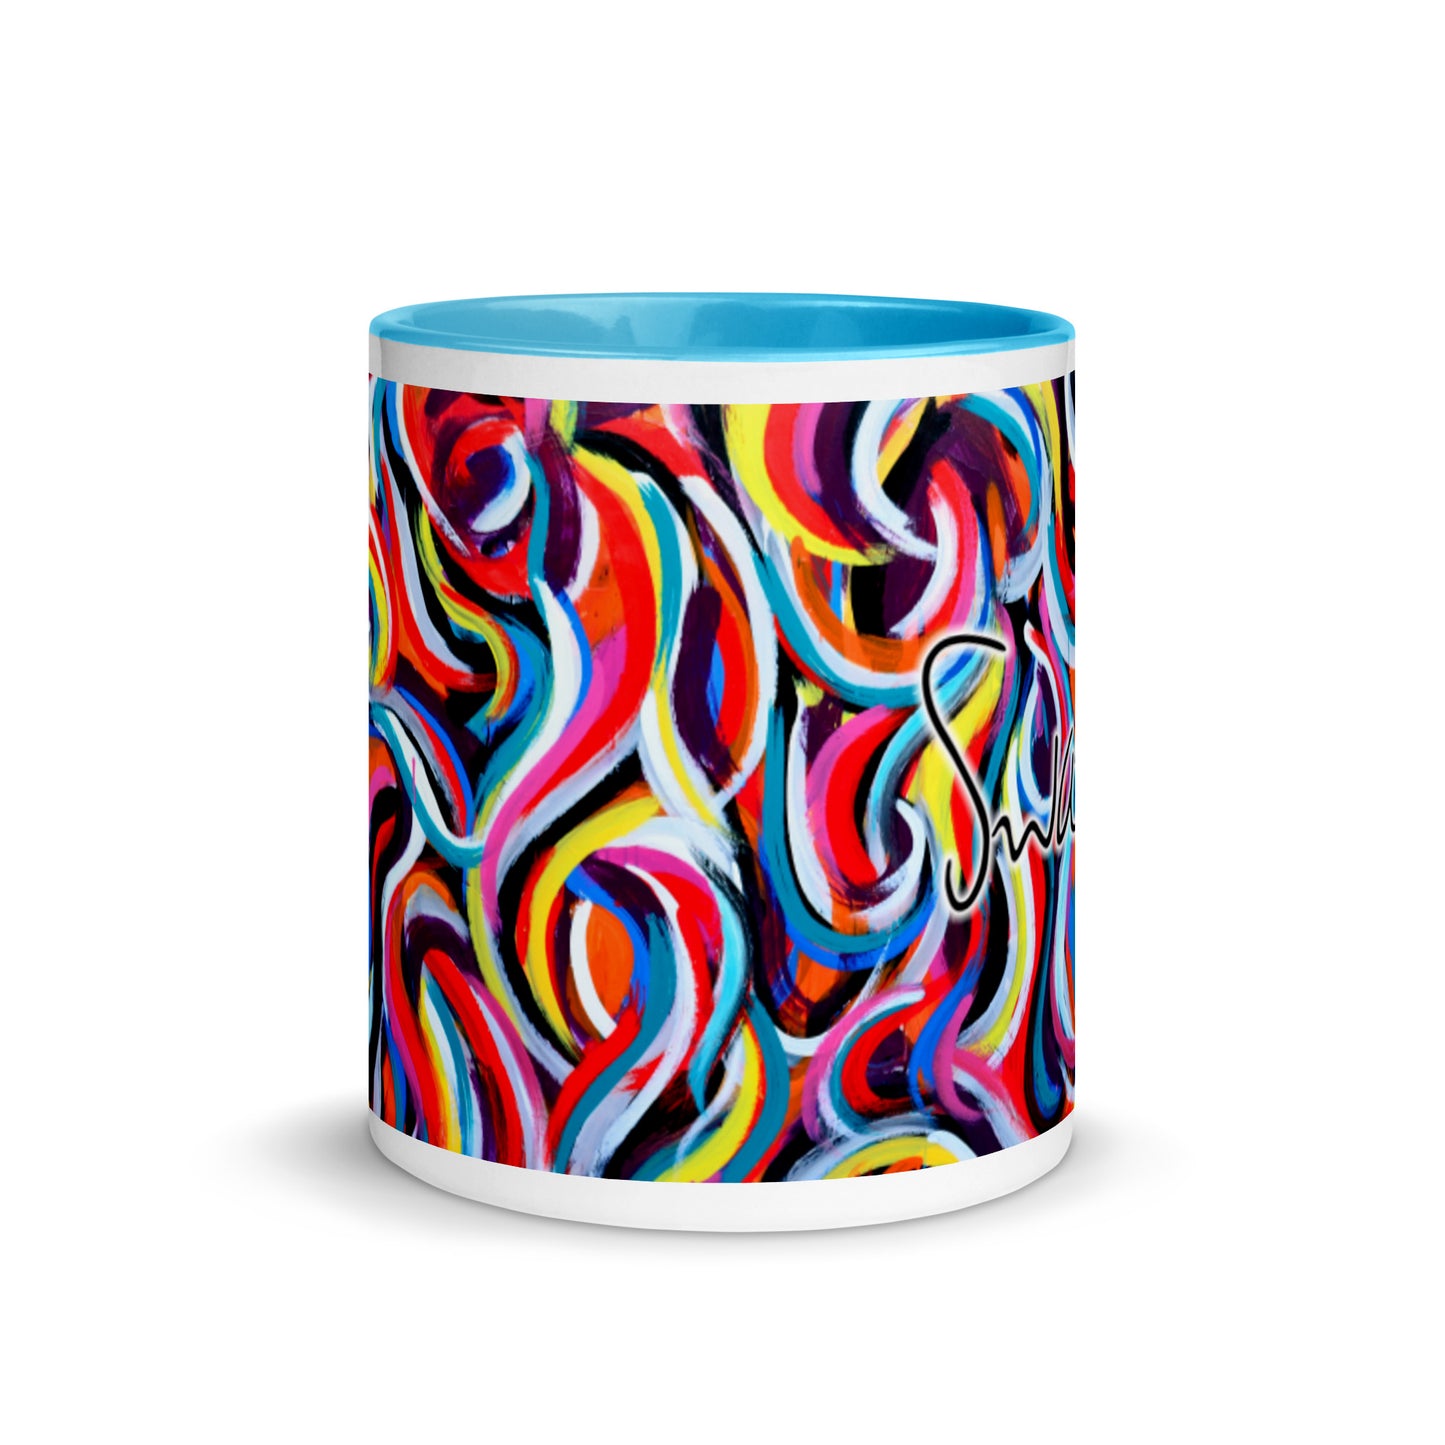 Mug with Color Inside - Multi color swirl design